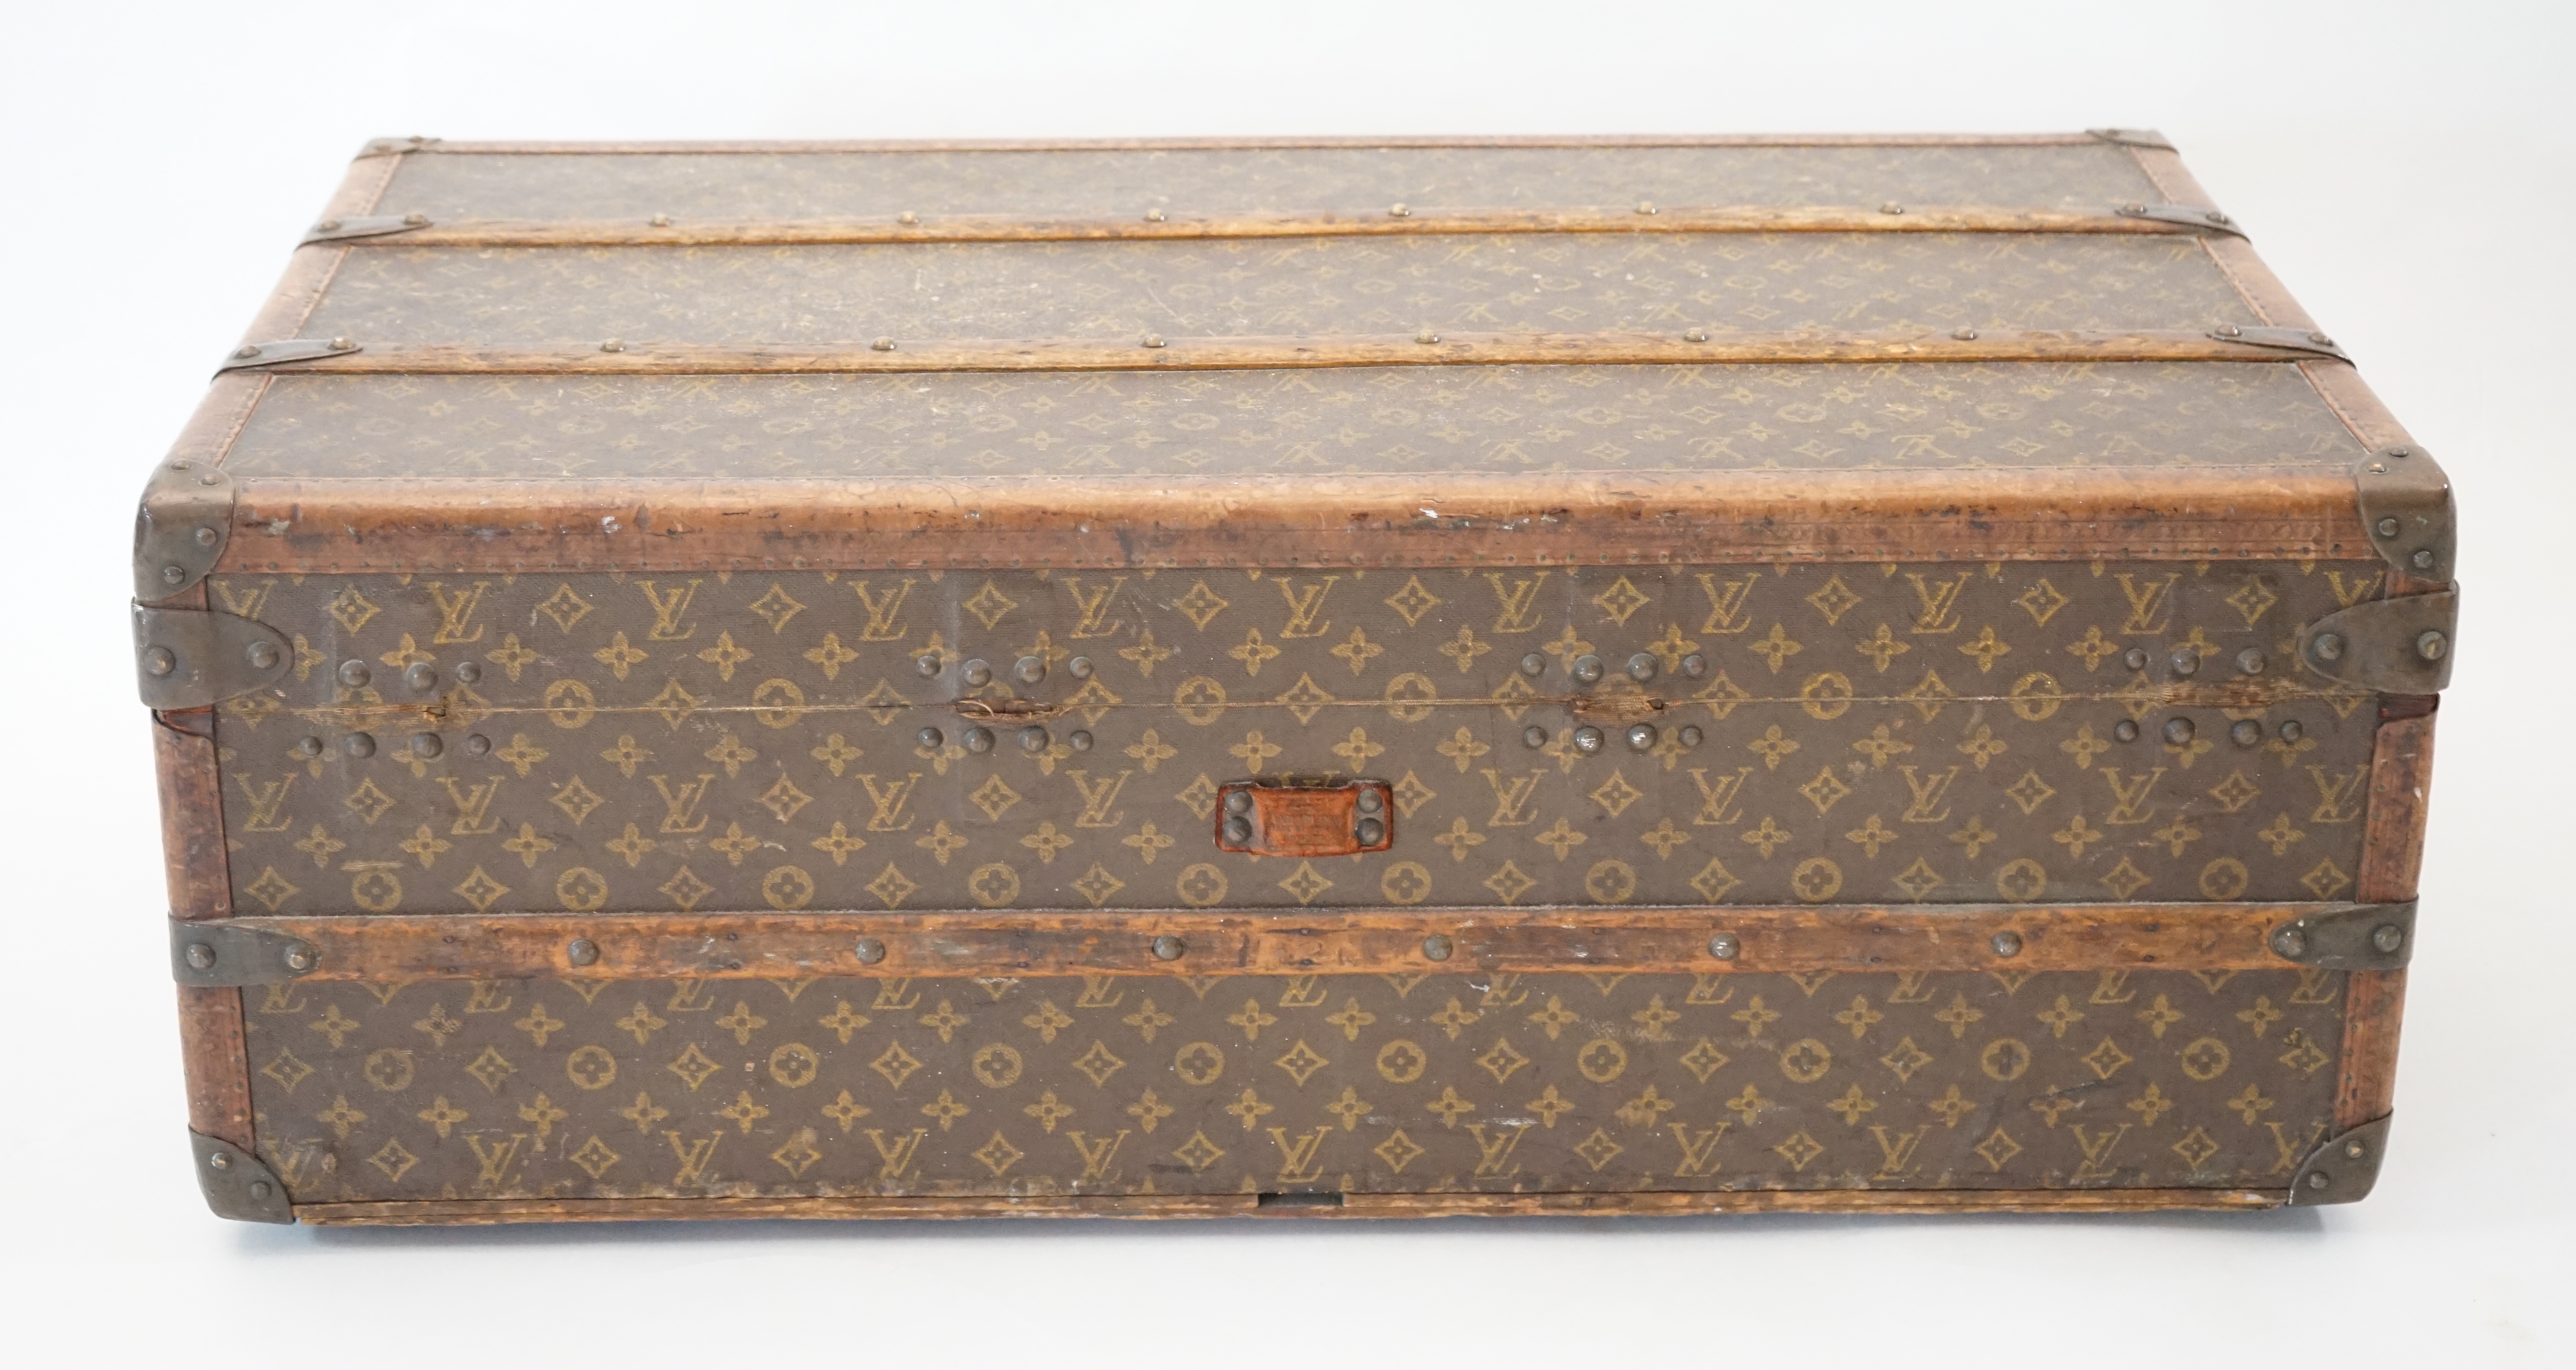 A vintage Louis Vuitton rectangular trunk, width 92cm, depth 52cm, height 34cm